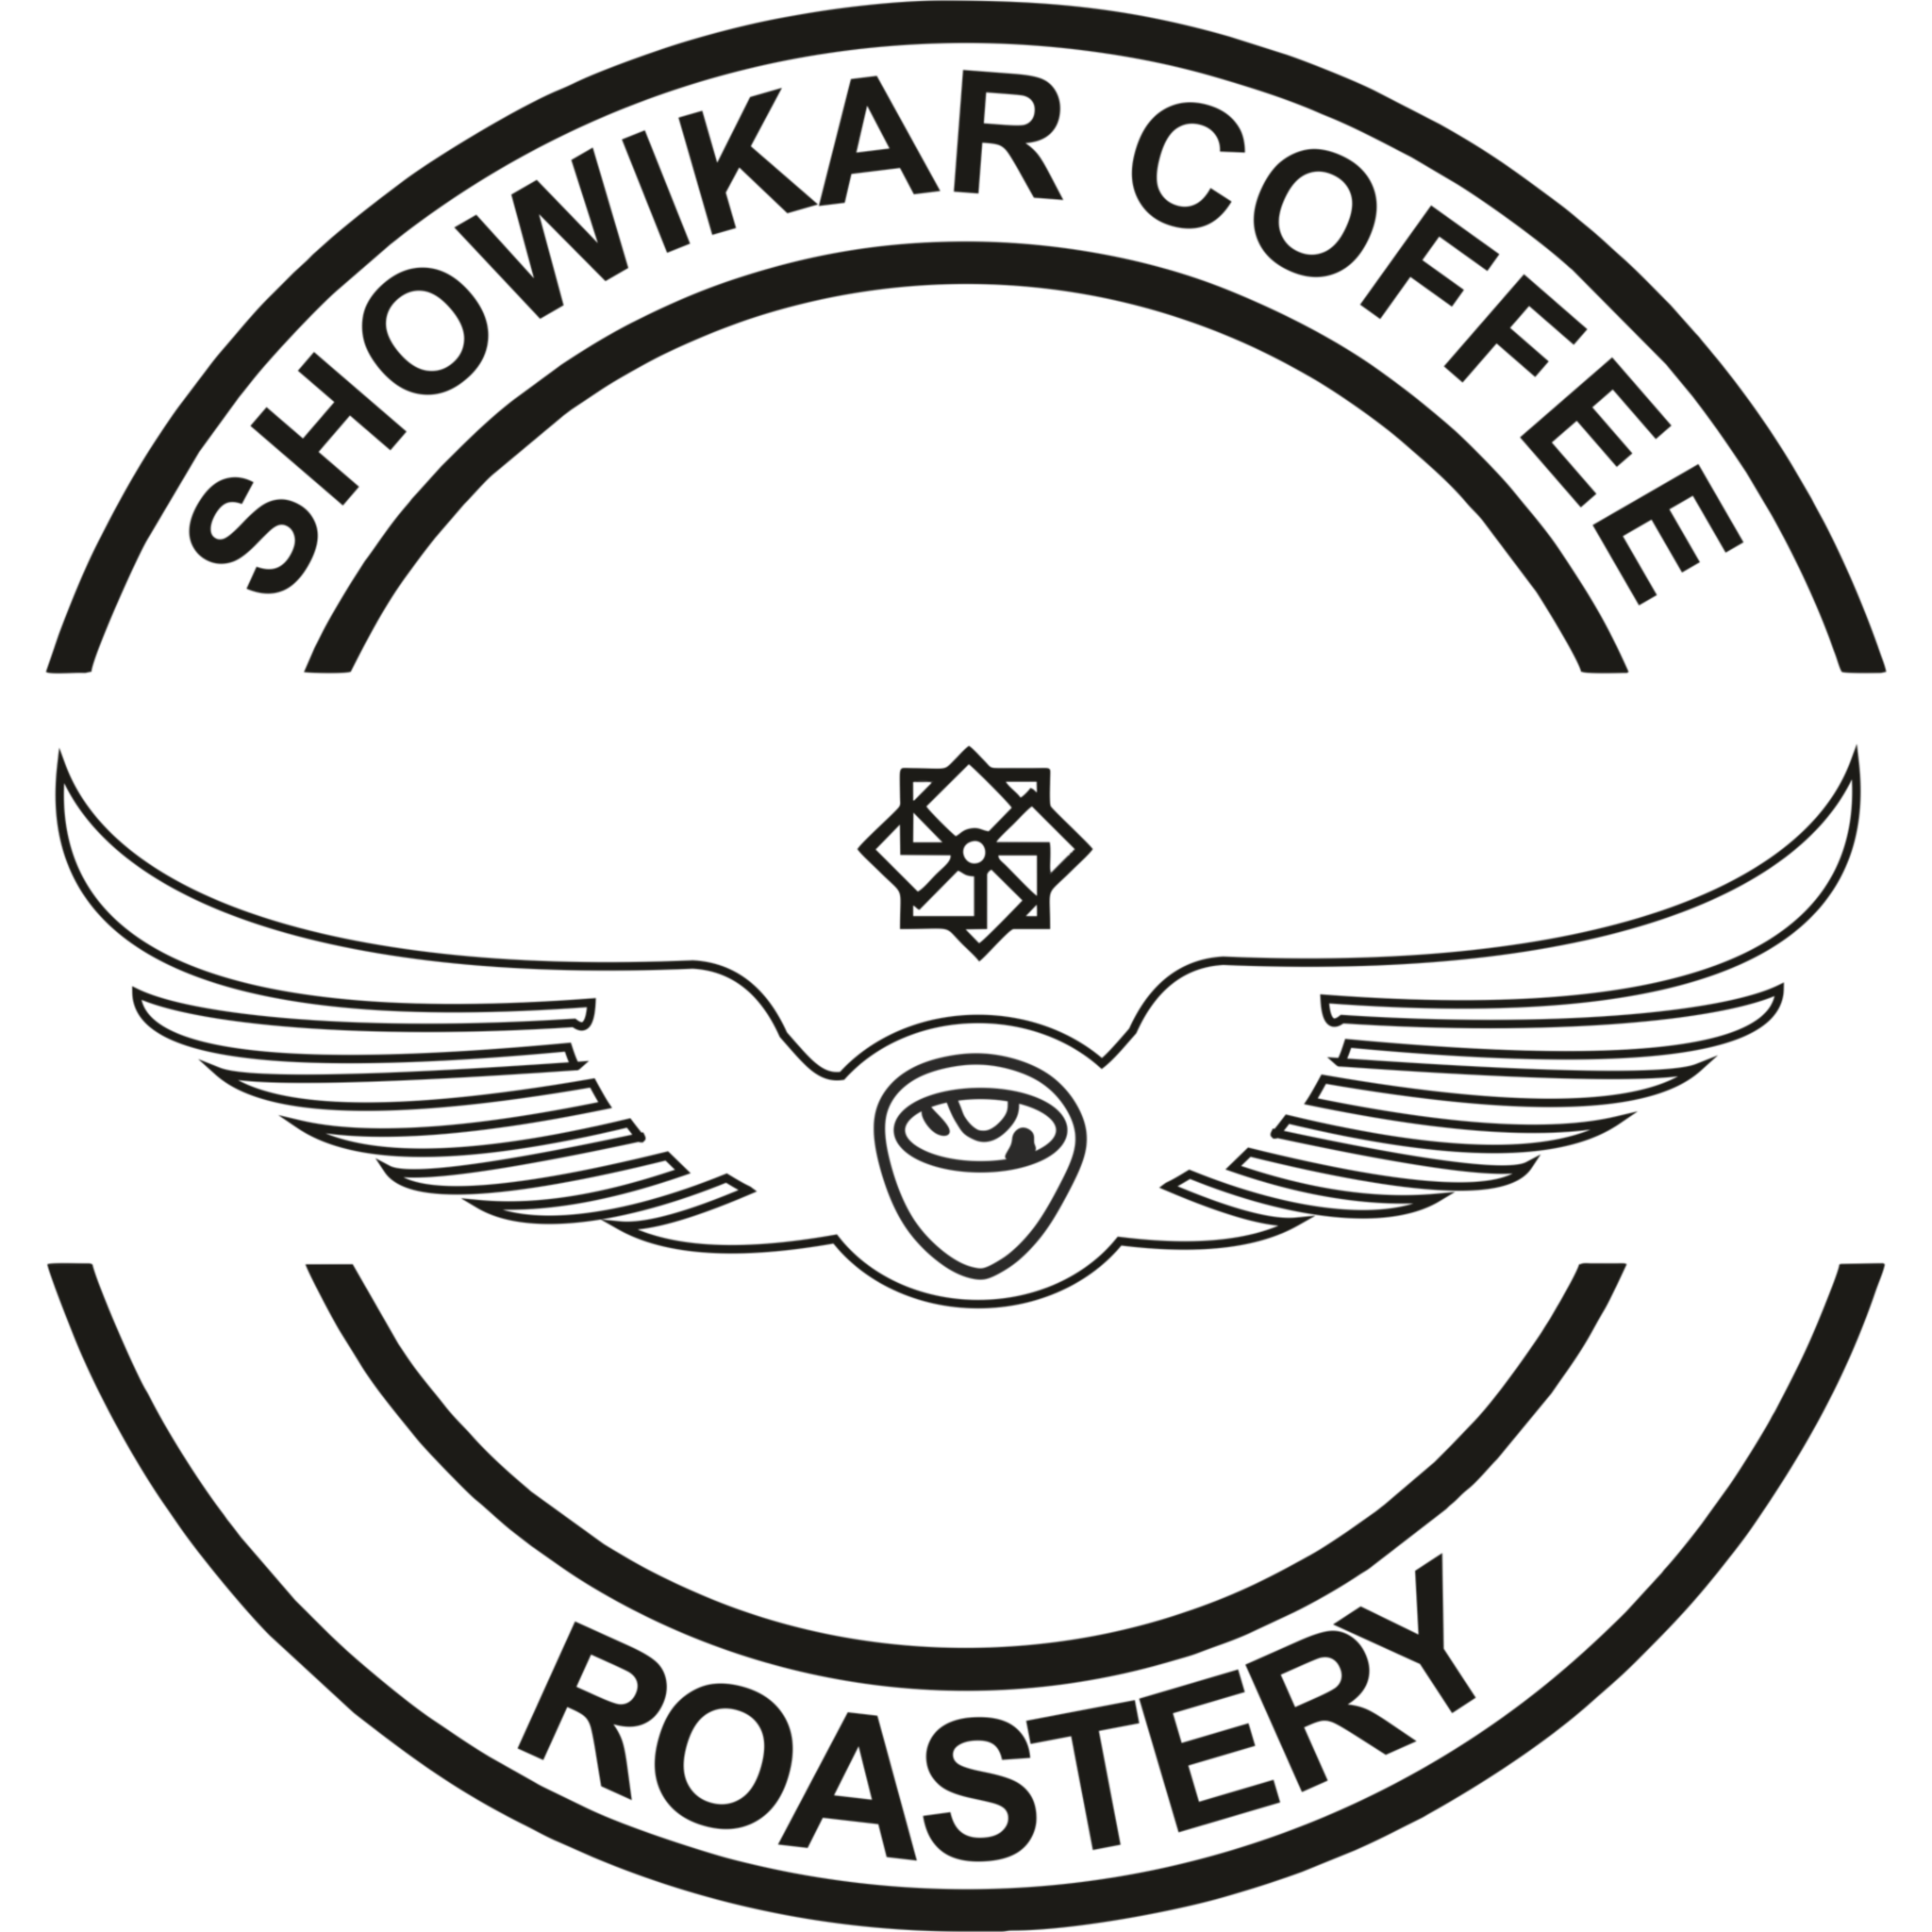 showikar_coffee